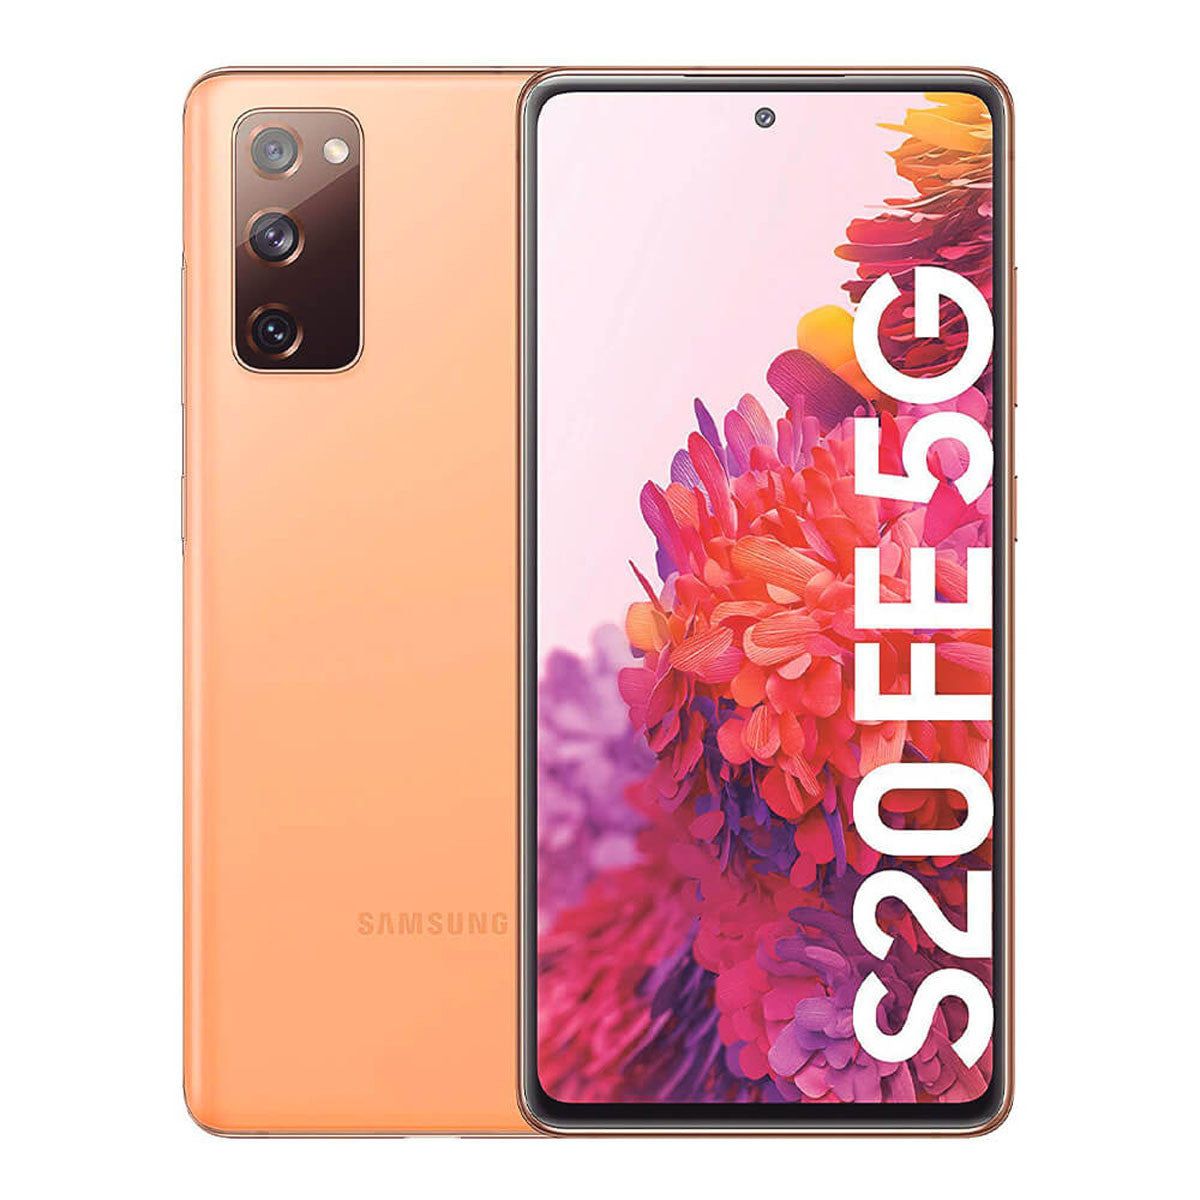 Samsung Galaxy S20 FE 5G 6GB/128GB Naranja (Cloud Orange) Dual SIM G781B Smartphone | Samsung